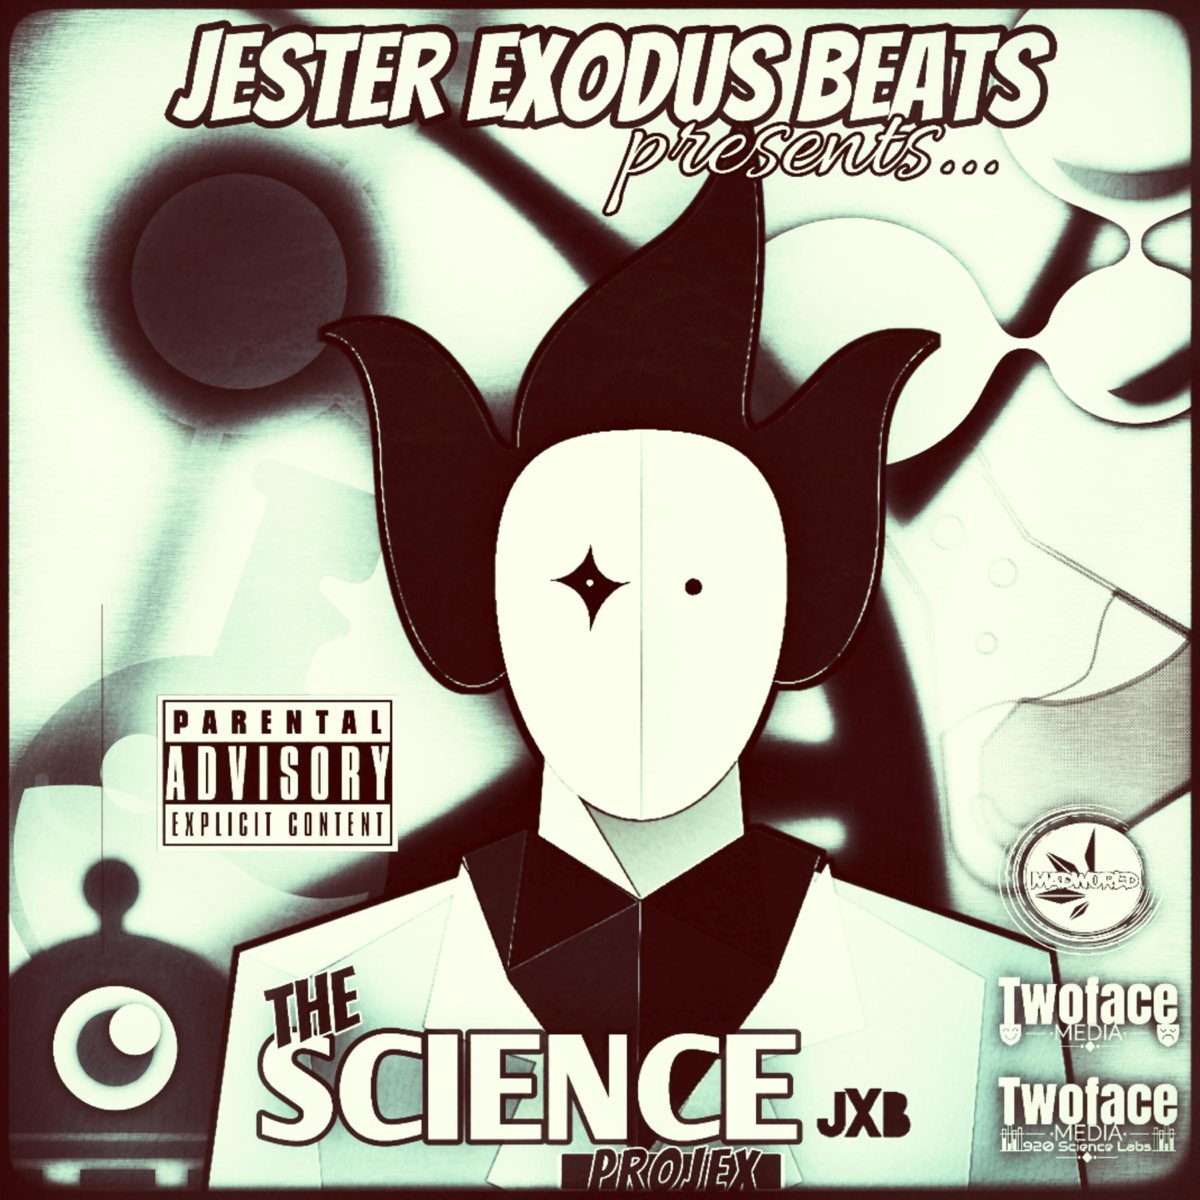 Jester Exodus Beats - The Science Projex 